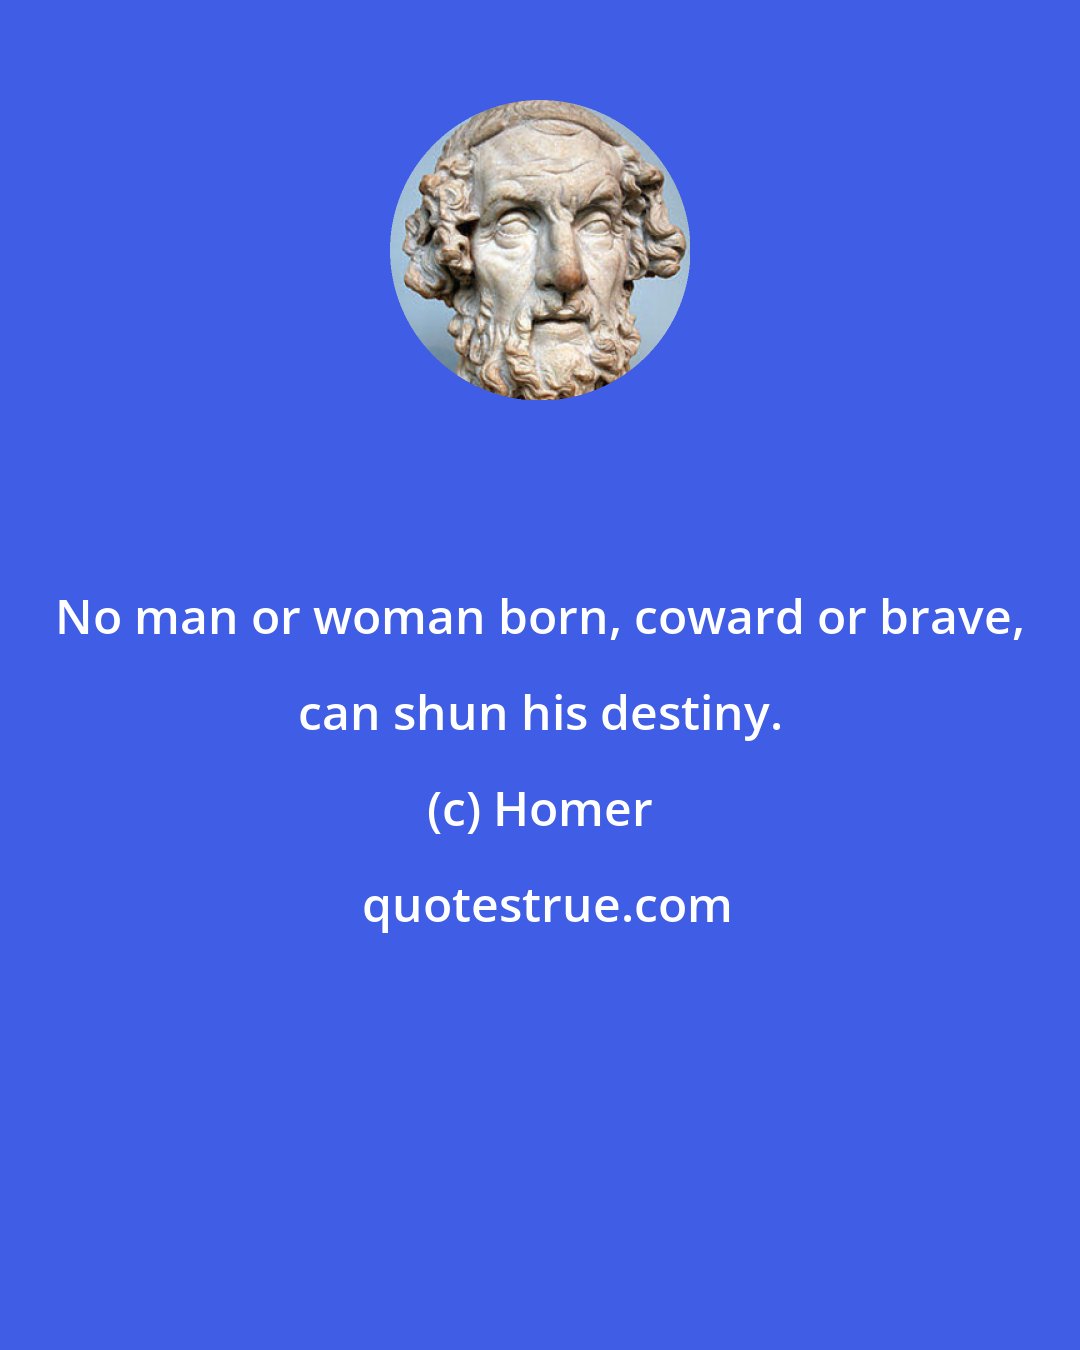 Homer: No man or woman born, coward or brave, can shun his destiny.